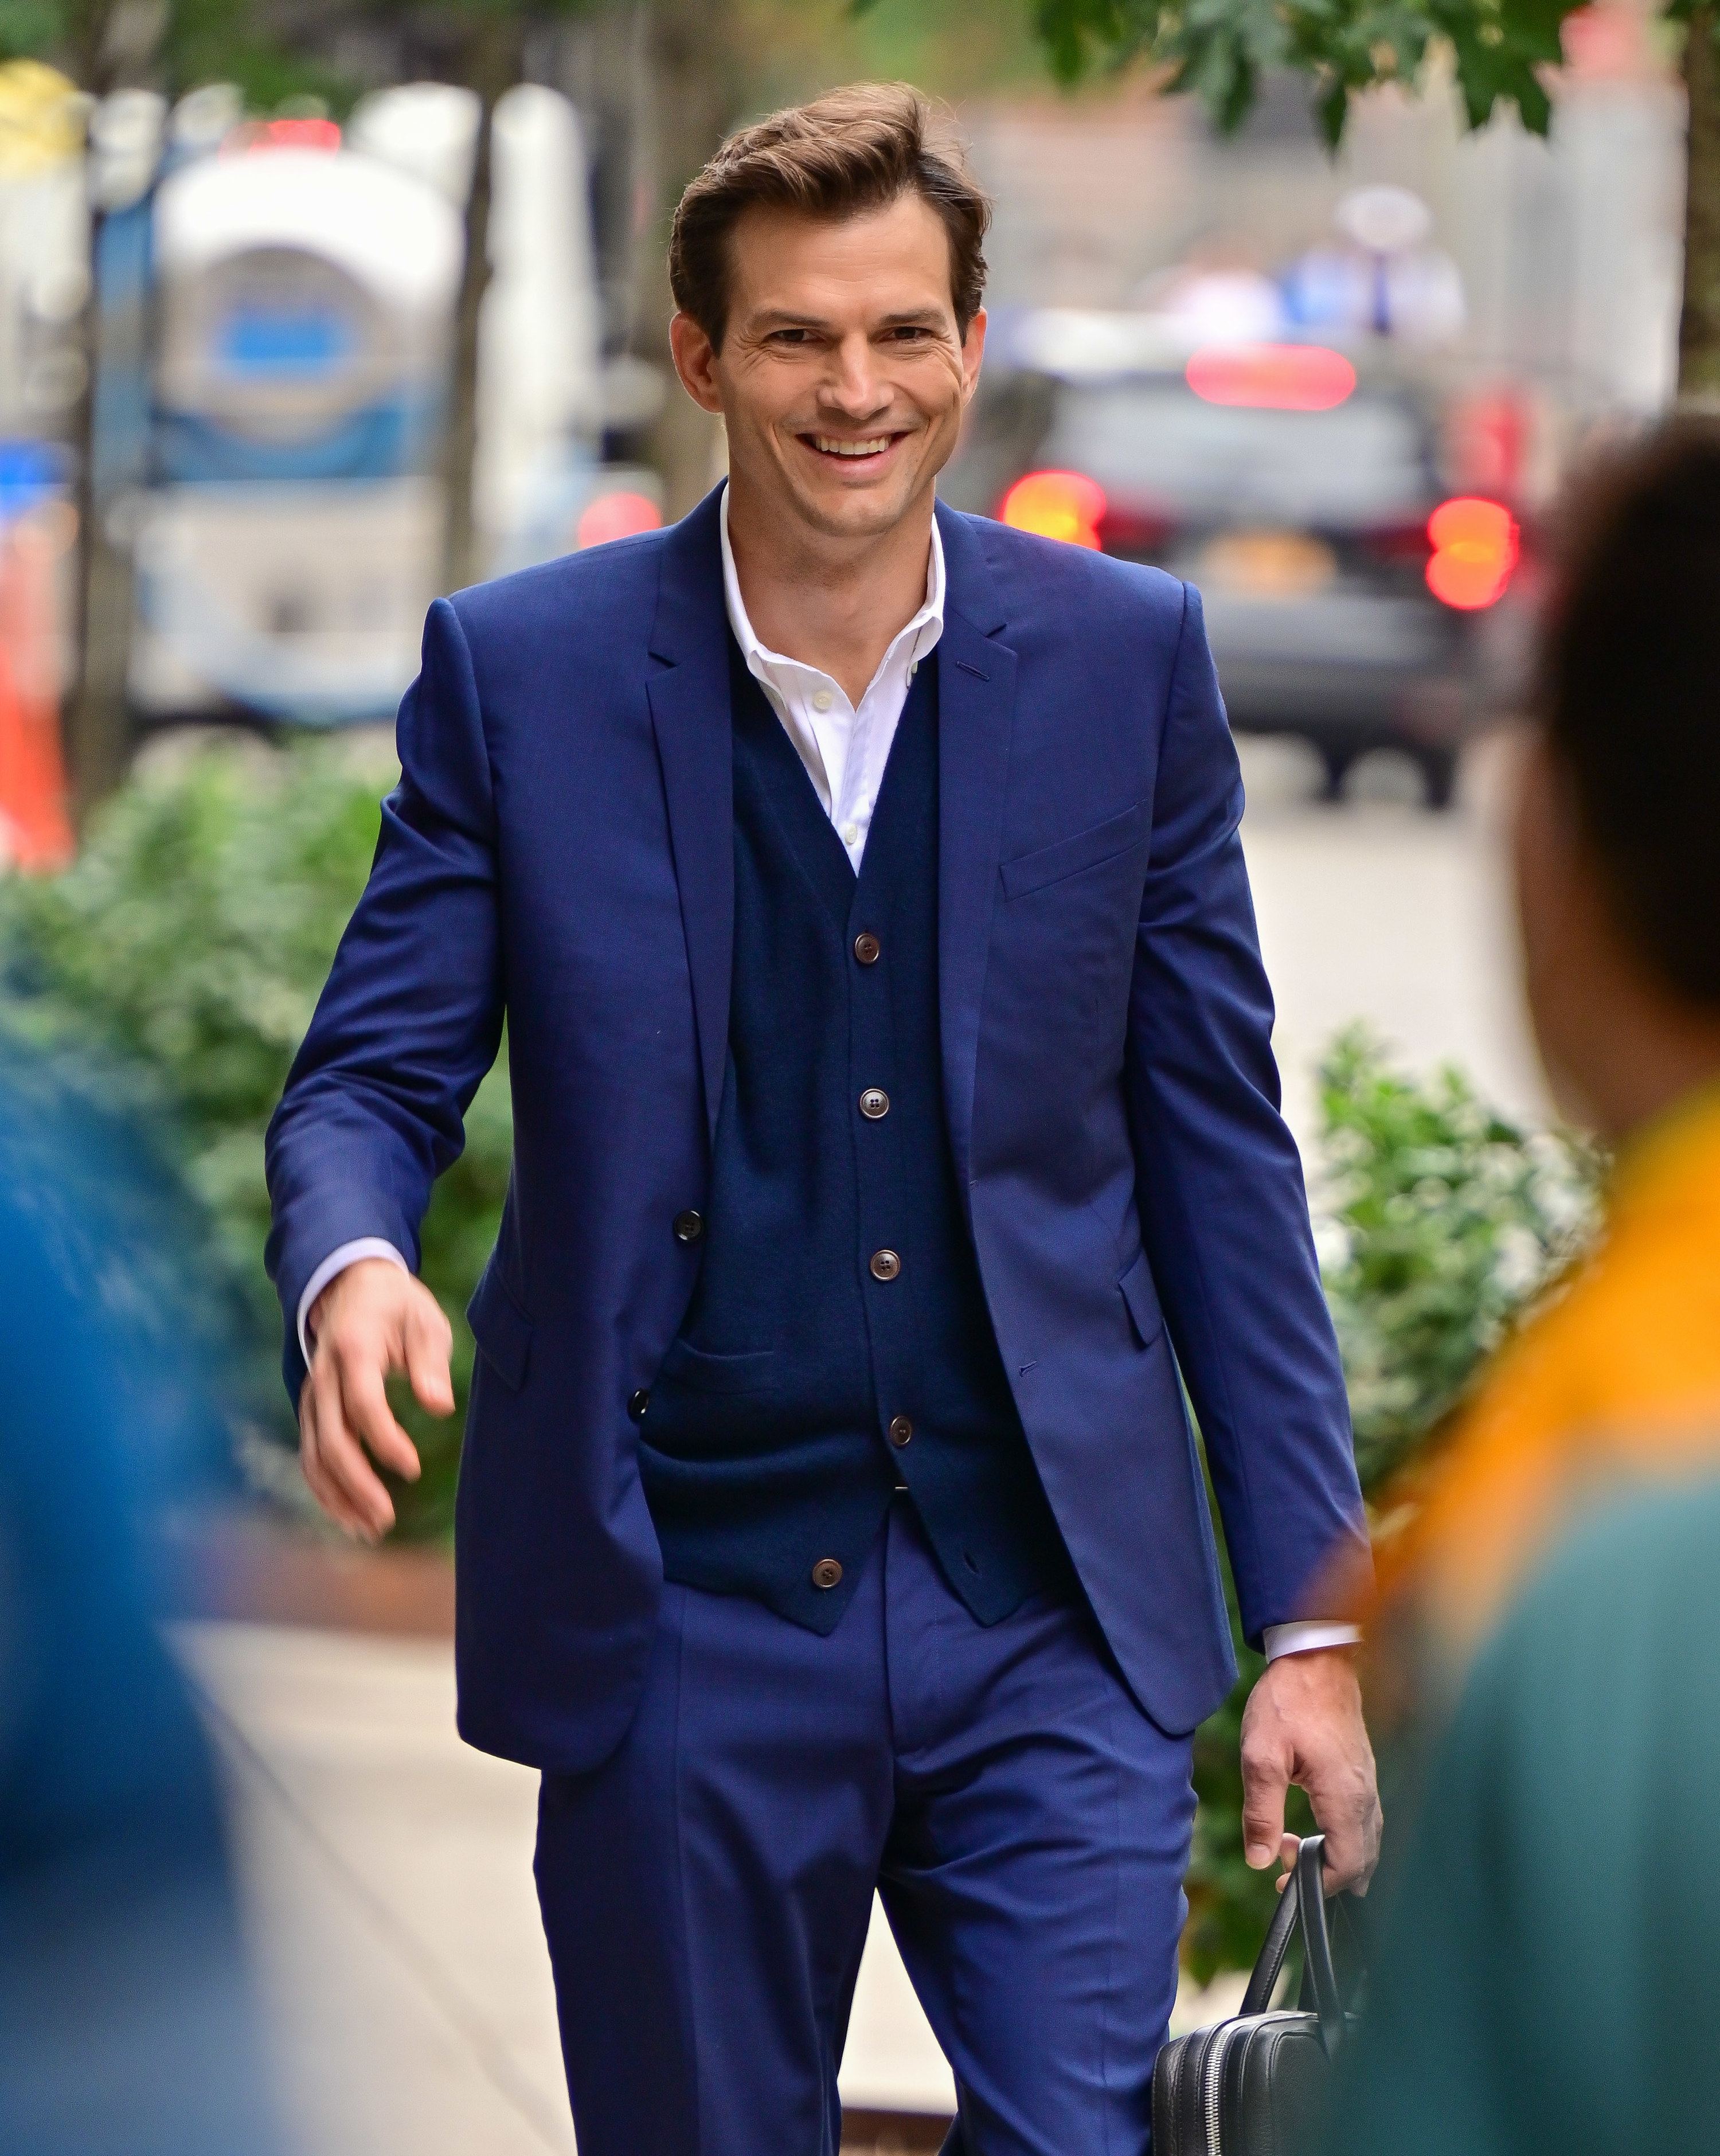 Ashton Kutcher in a suit walking